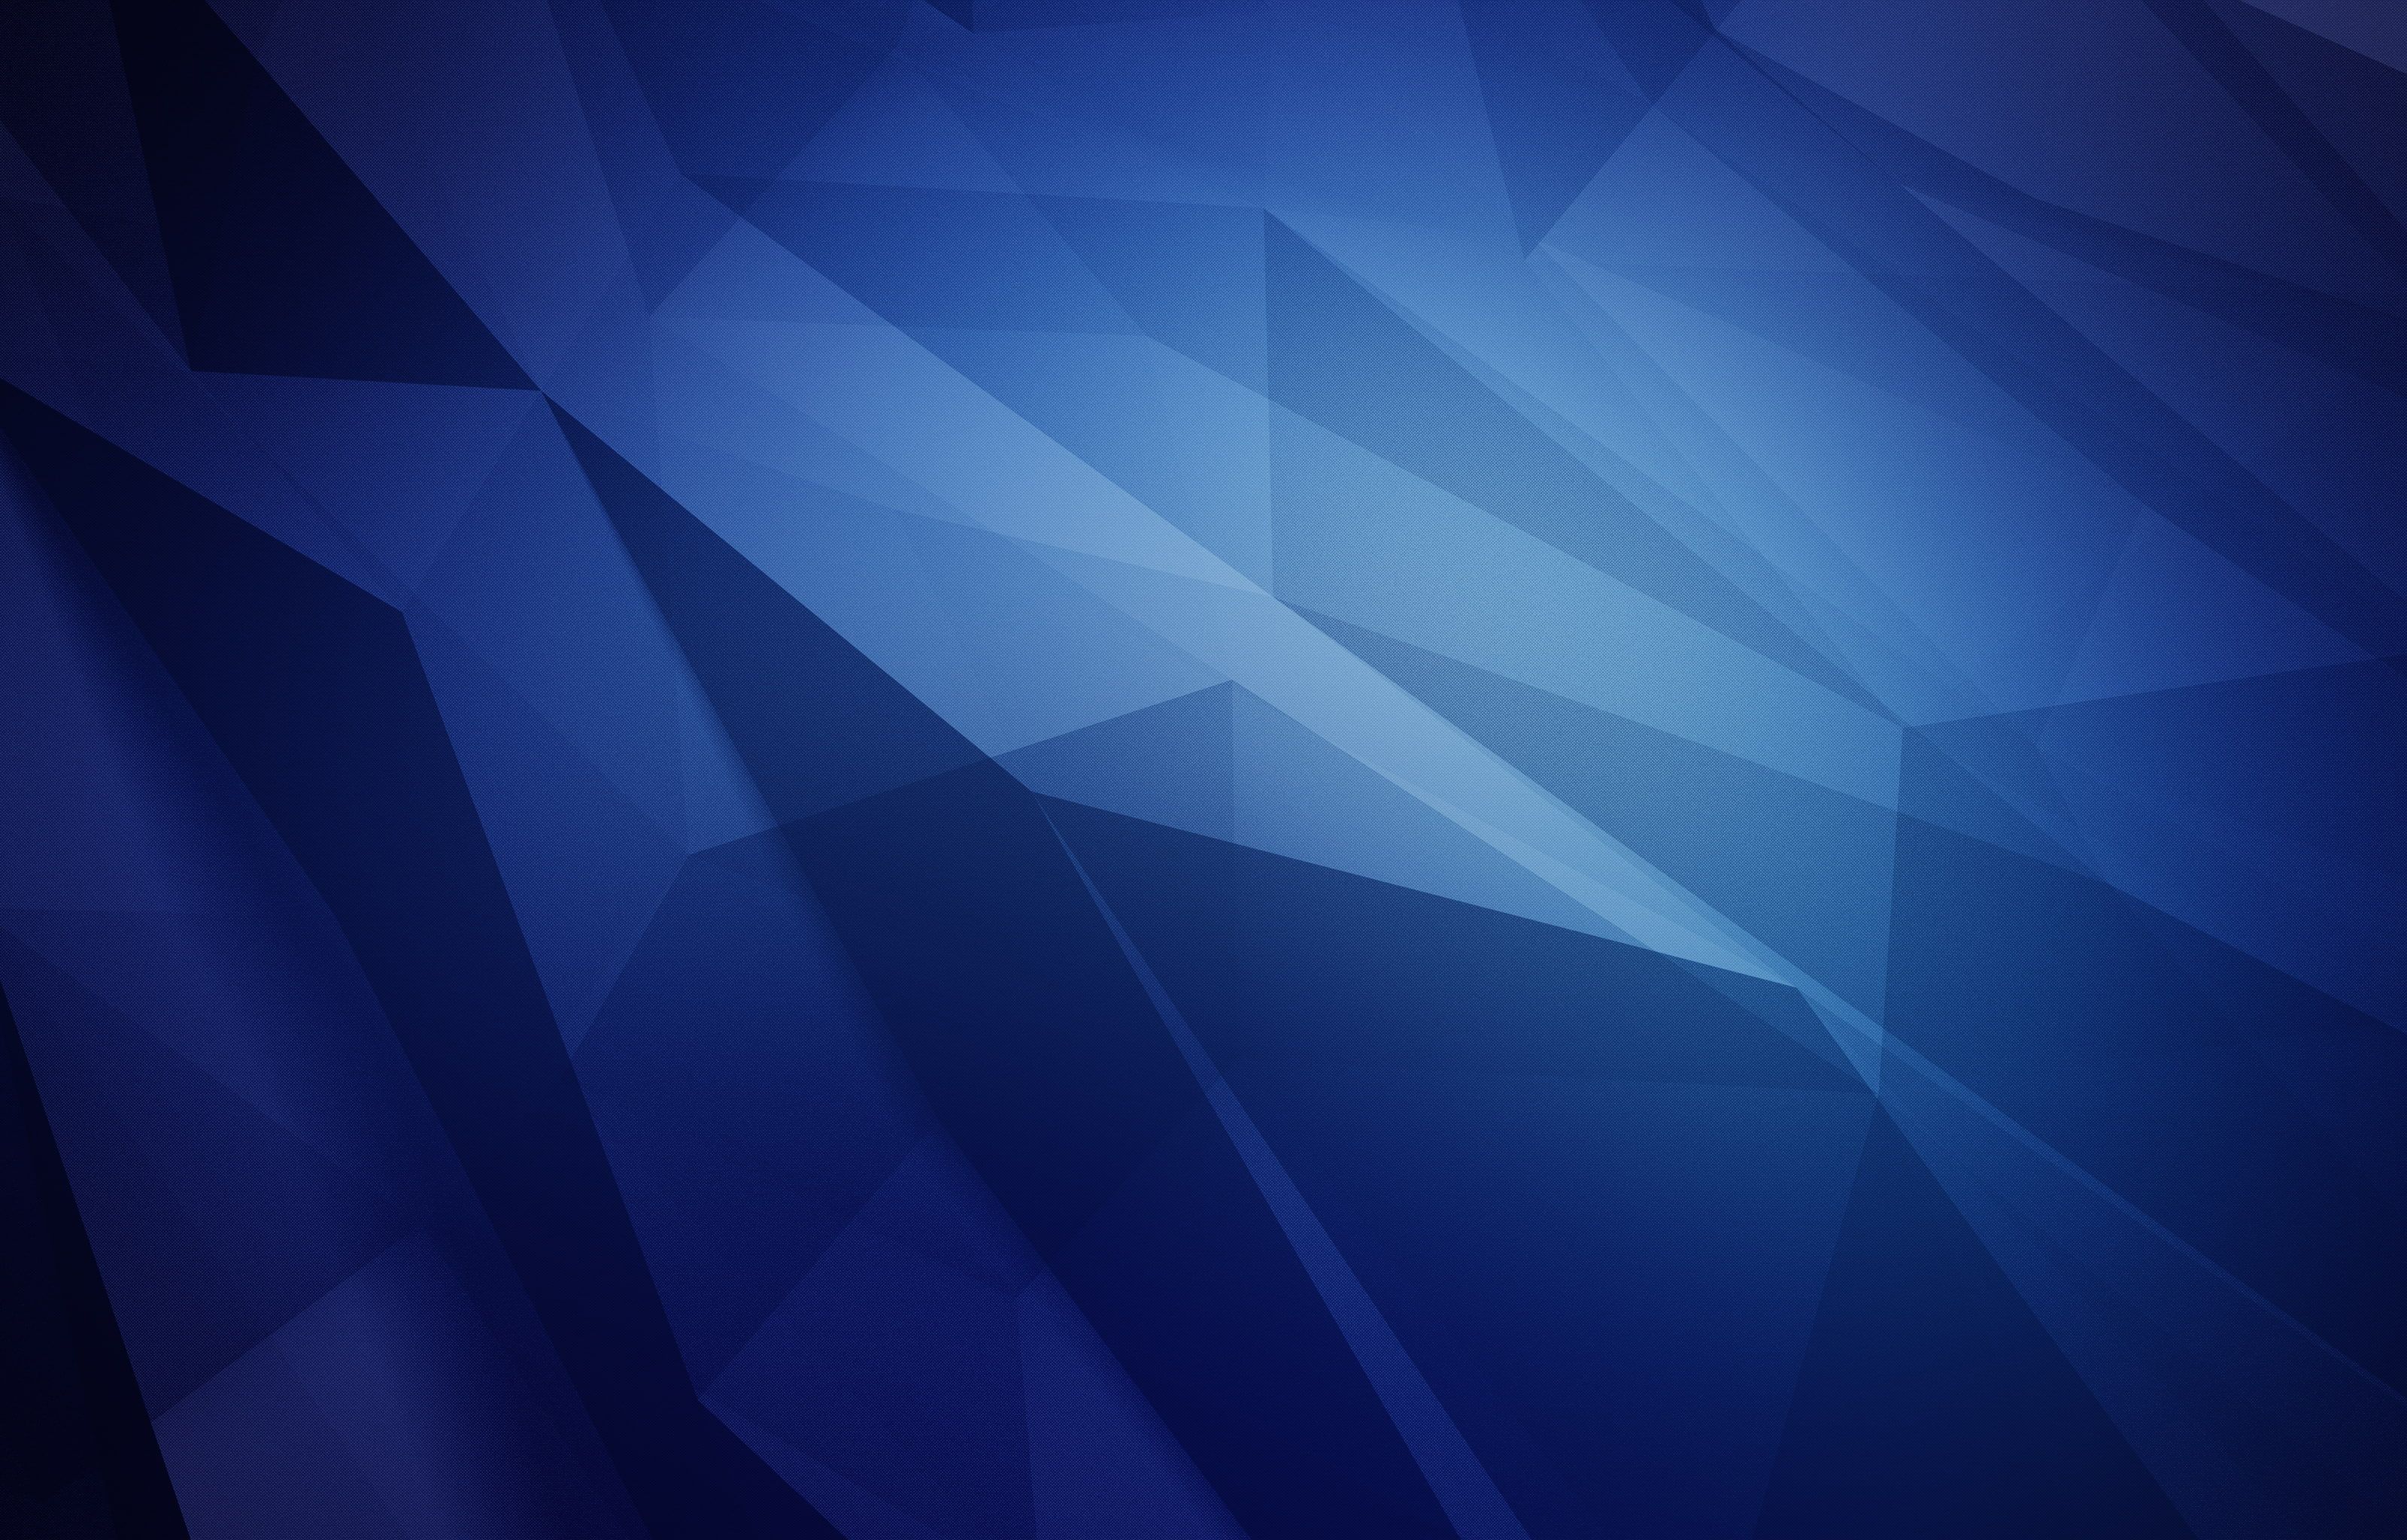 Shapes #Polygons #Blue K #wallpaper #hdwallpaper #desktop